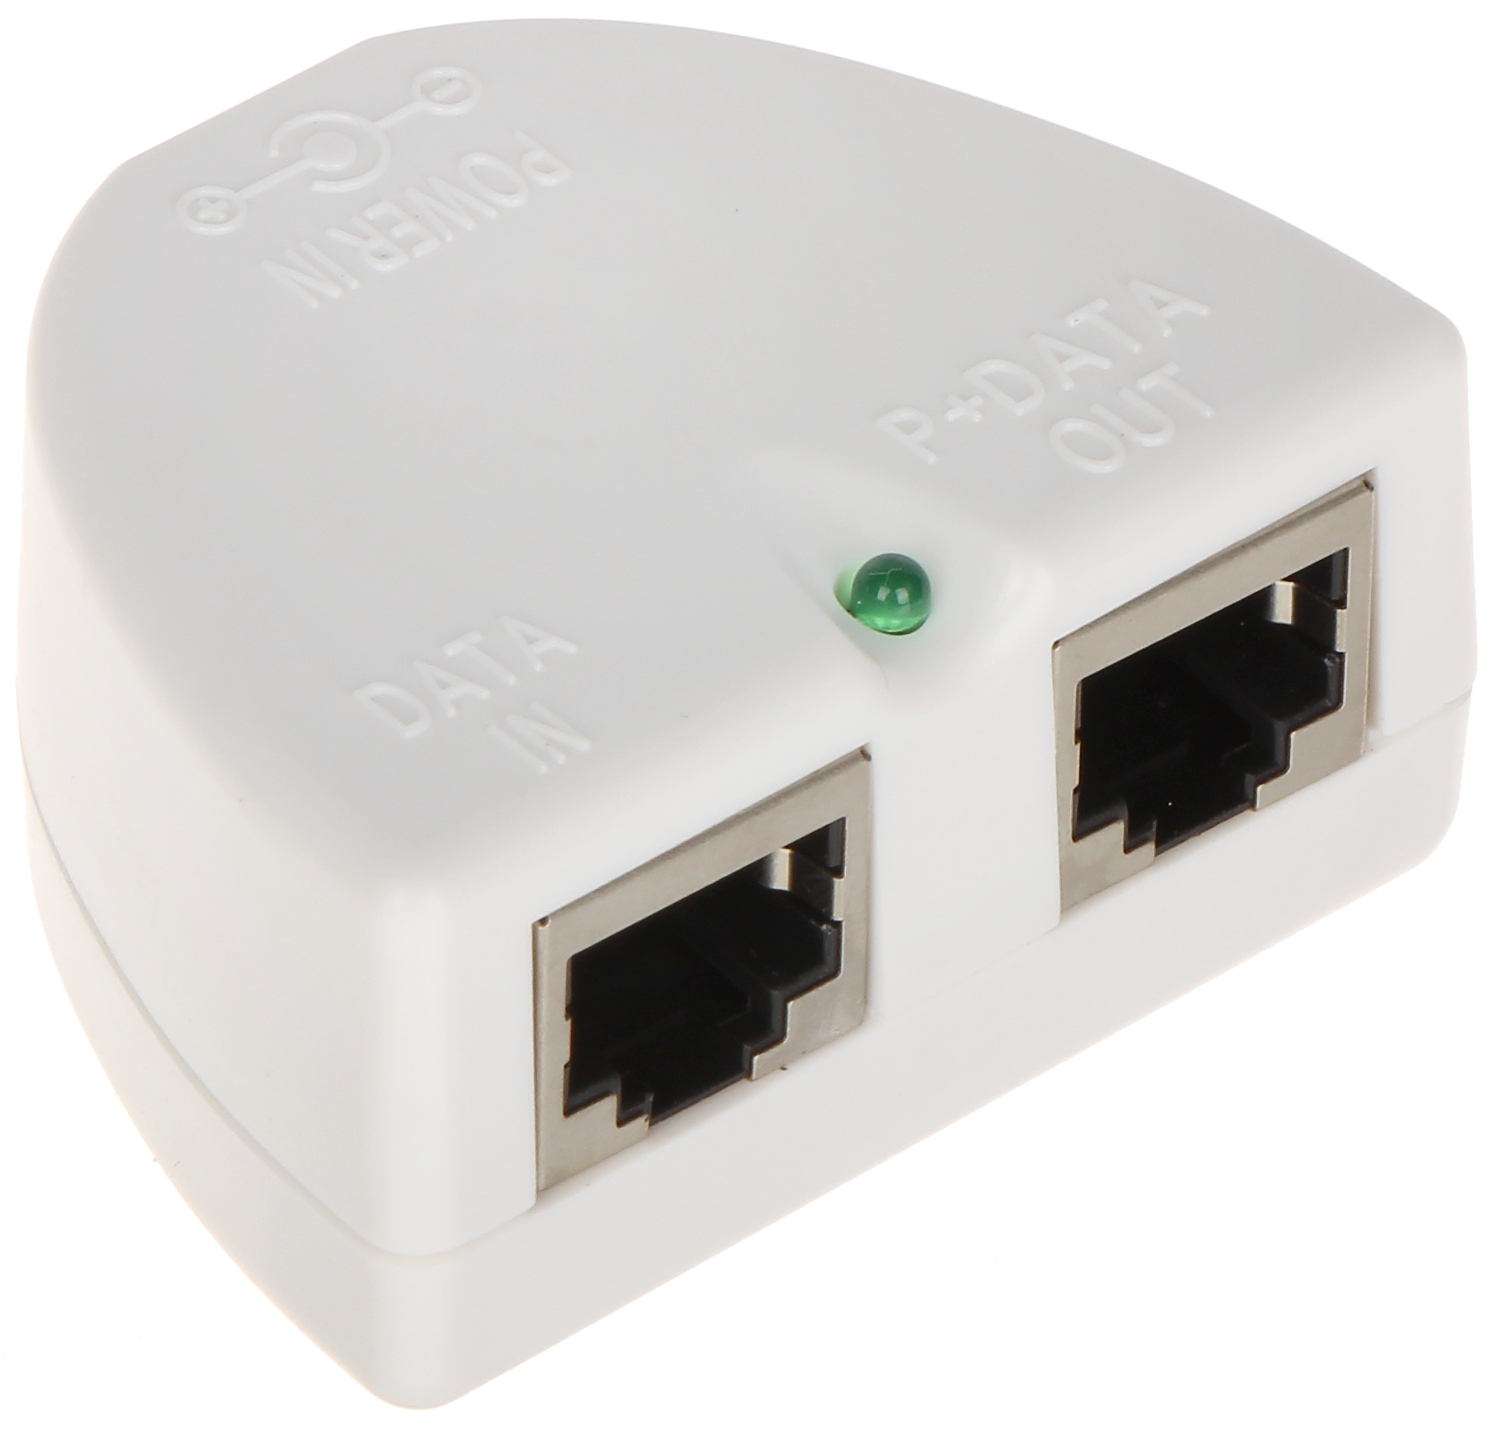 DRIFT VIA PARTVINNAD KABEL POE-UNI/2 - Power over Ethernet (PoE) - Delta